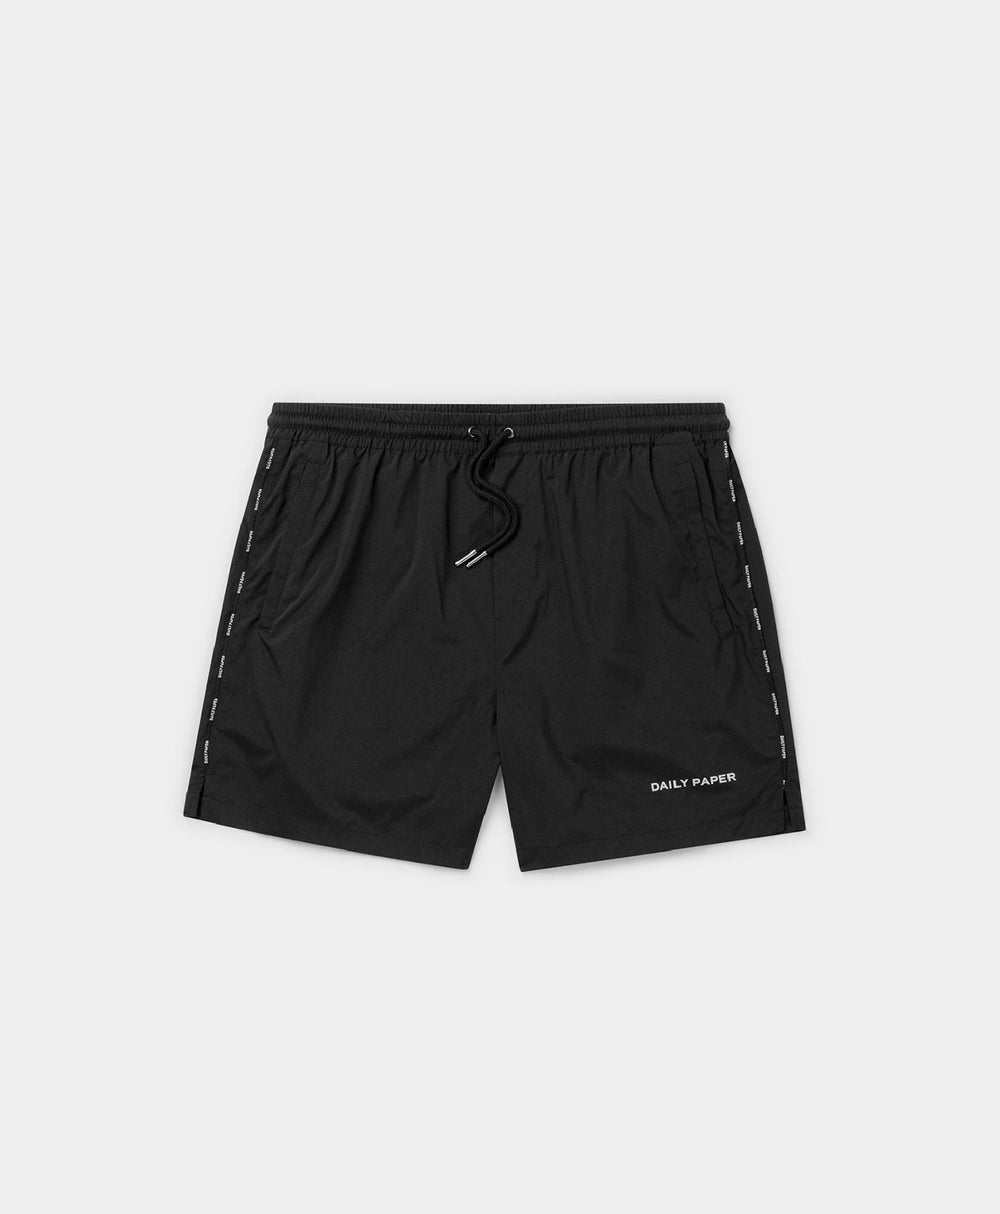 DP - Black Mehani Shorts - Packshot - Front